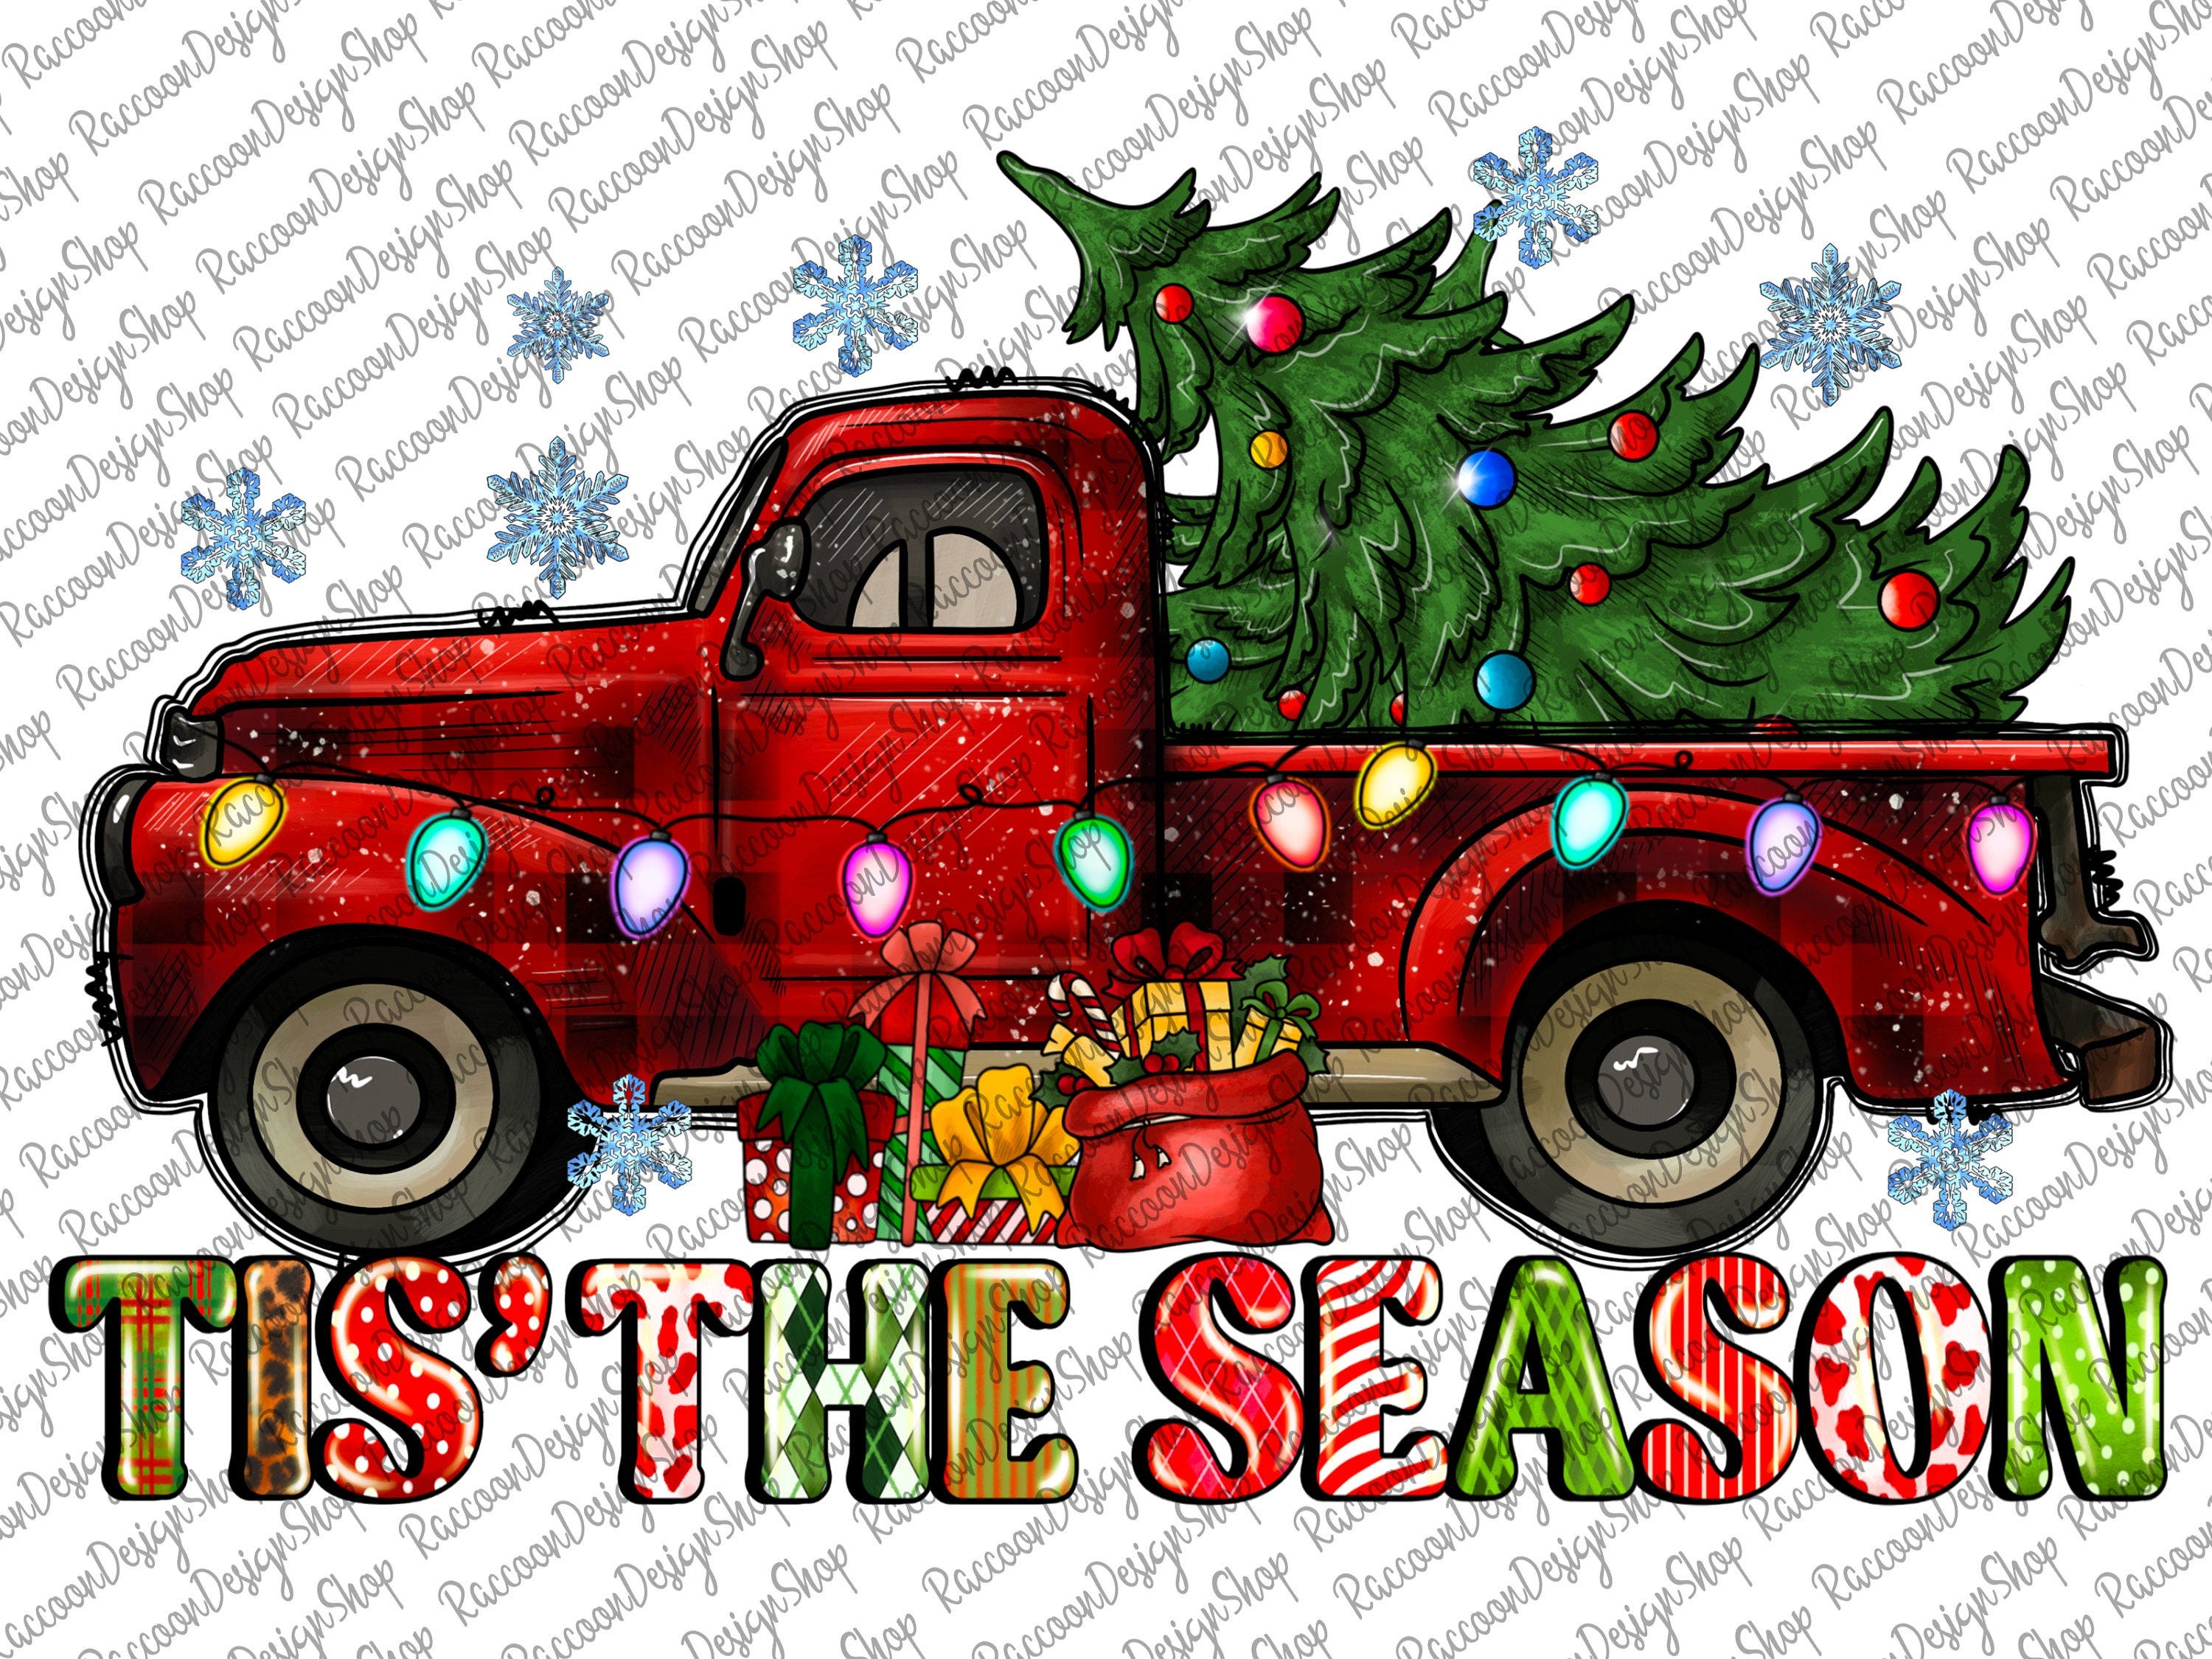 Tis the season Christmas Truck Sublimation Designs Downloads,Digital Download,Sublimation Graphics,Merry Christmas,Red Plaid,Christmas Truck